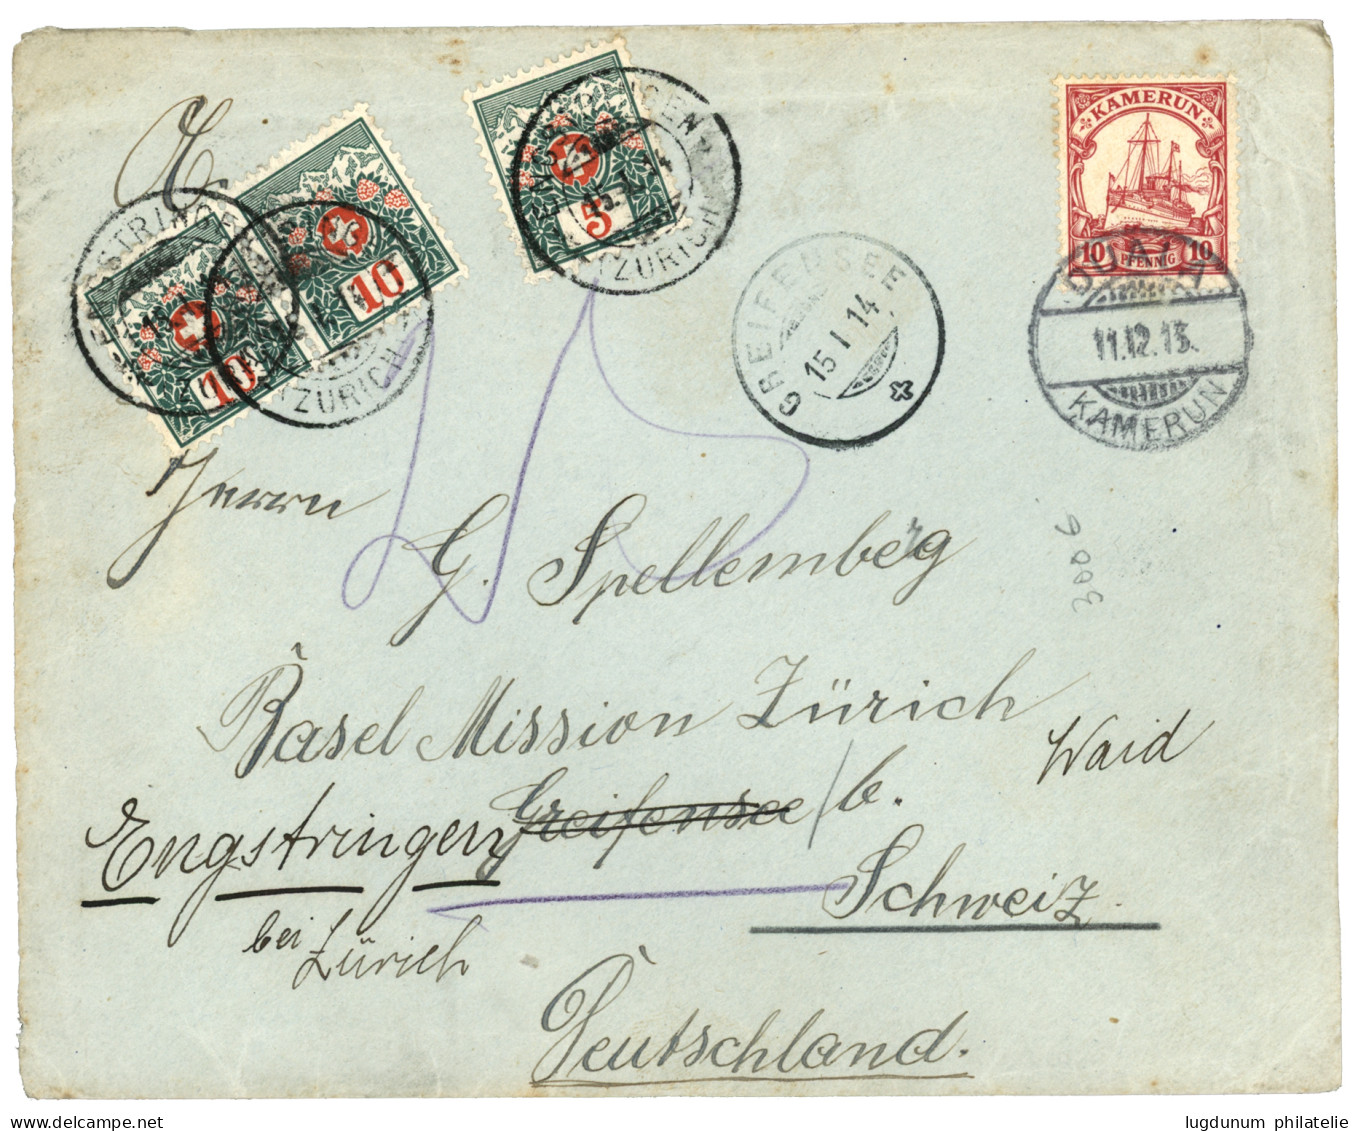 DUALA : 1913 KAMERUN 10pf Canc. DUALA + SWITZERLAND POSTAGE DUES 5c + 10c (x2) On Envelope To GERMANY Redirected To BASE - Kameroen